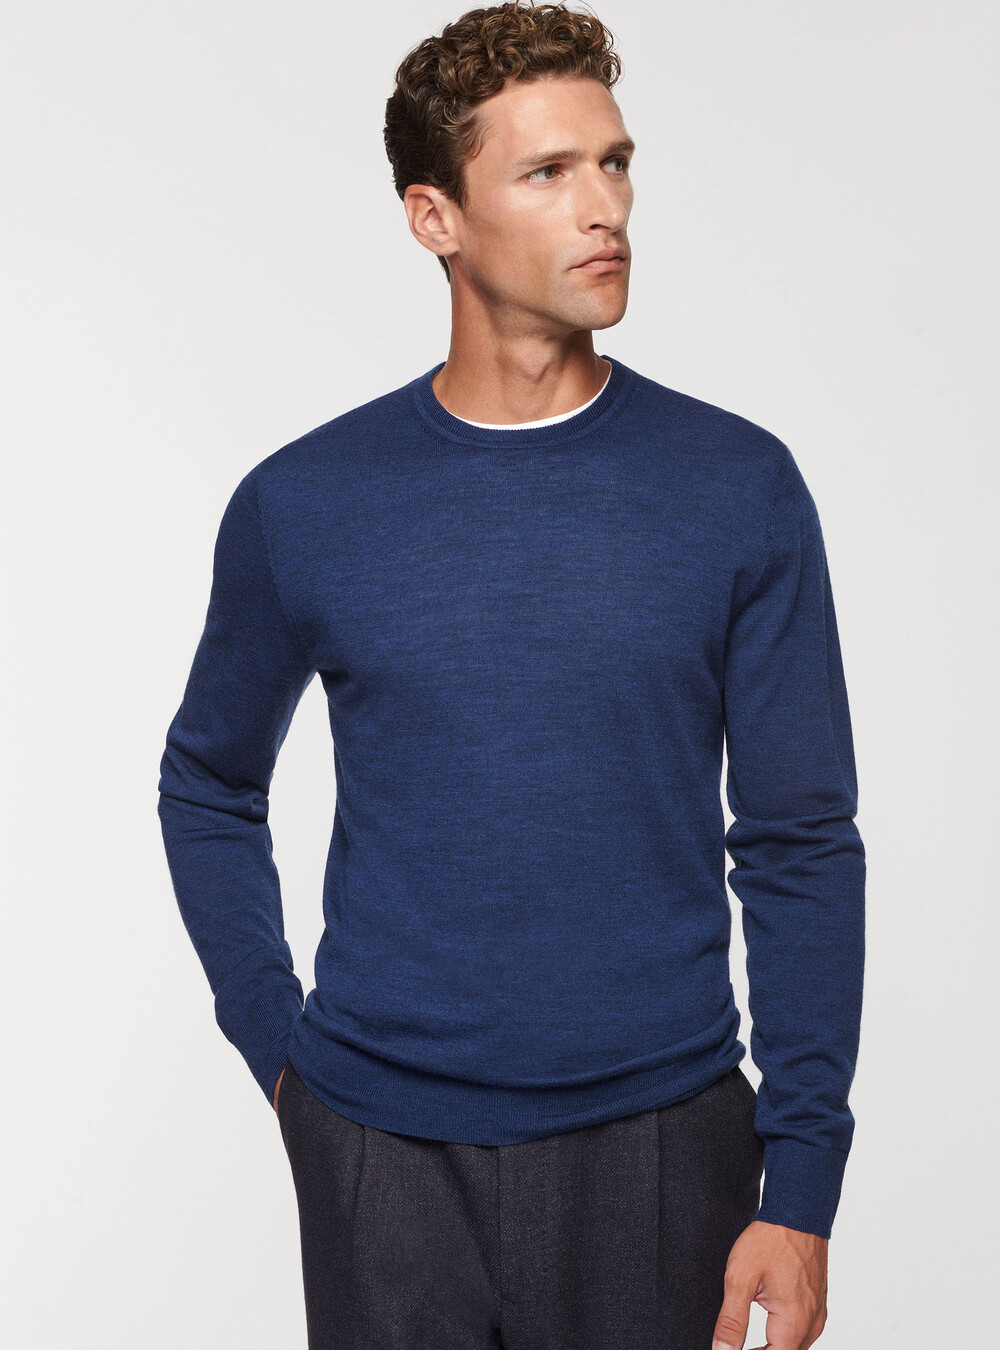 Camiseta hombres manga larga pura lana Merino gris crudo azul